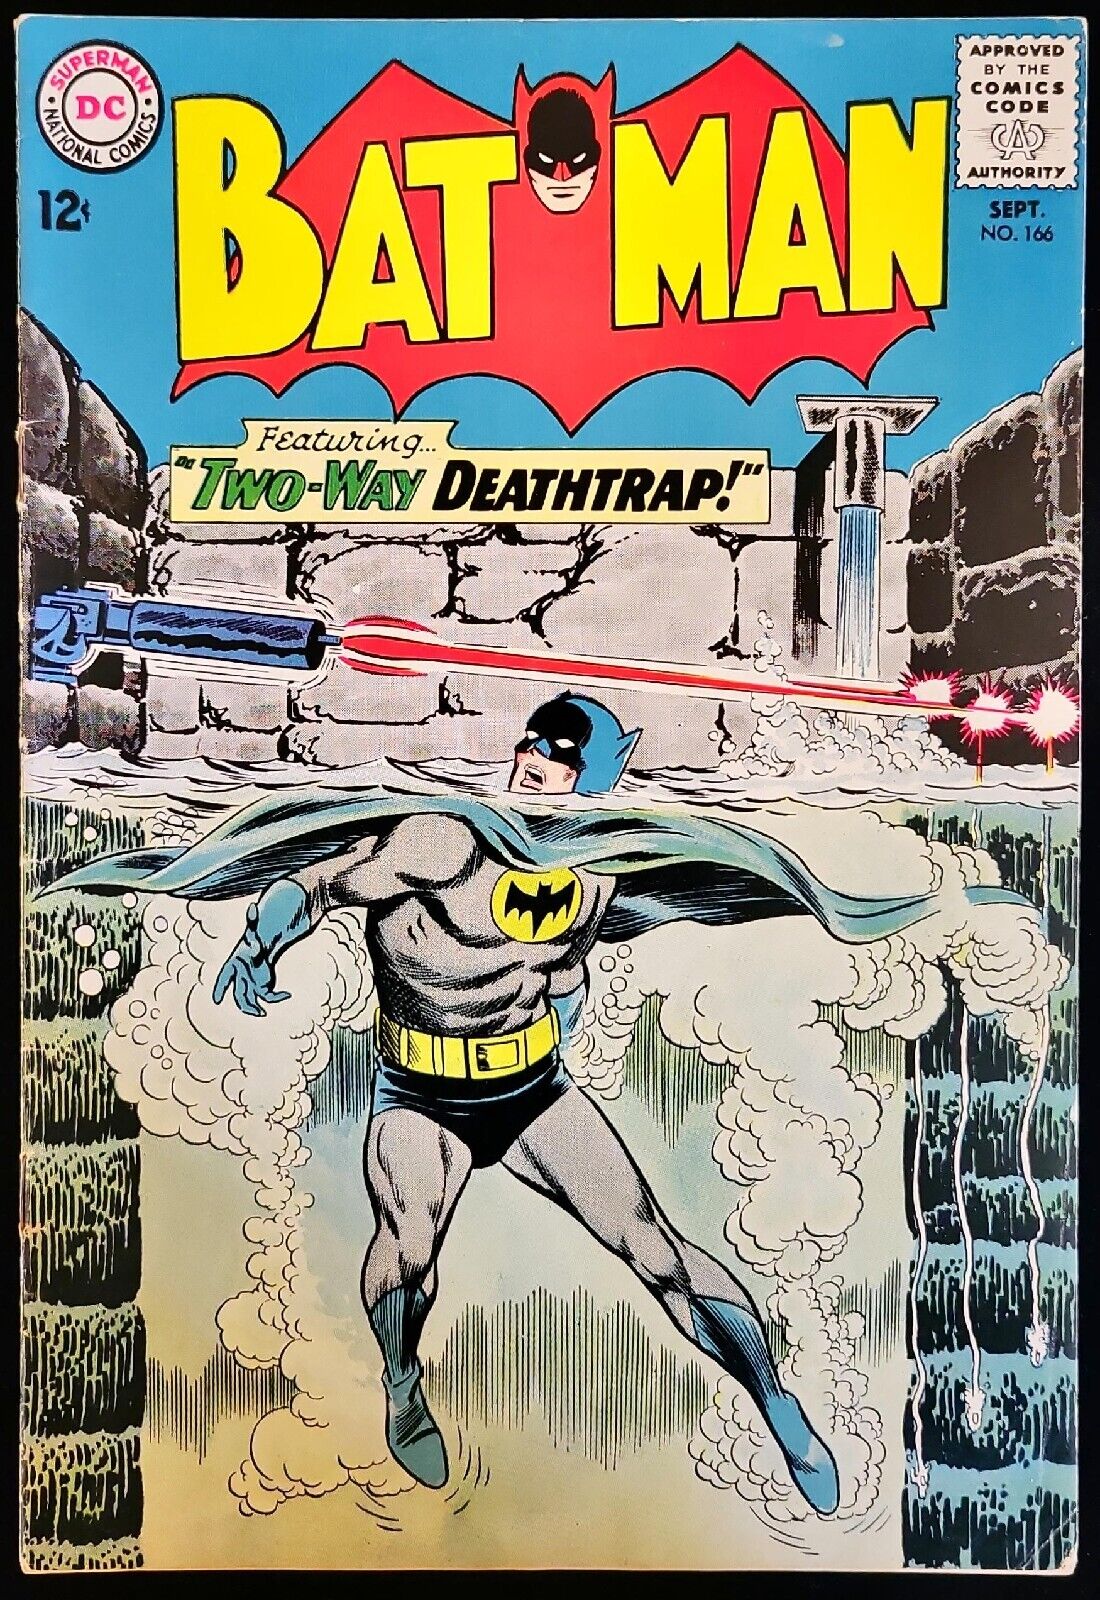 Batman #166 (DC Comics, 1964) Two-Way Deathtrap -   5.5 condition  (FN-)